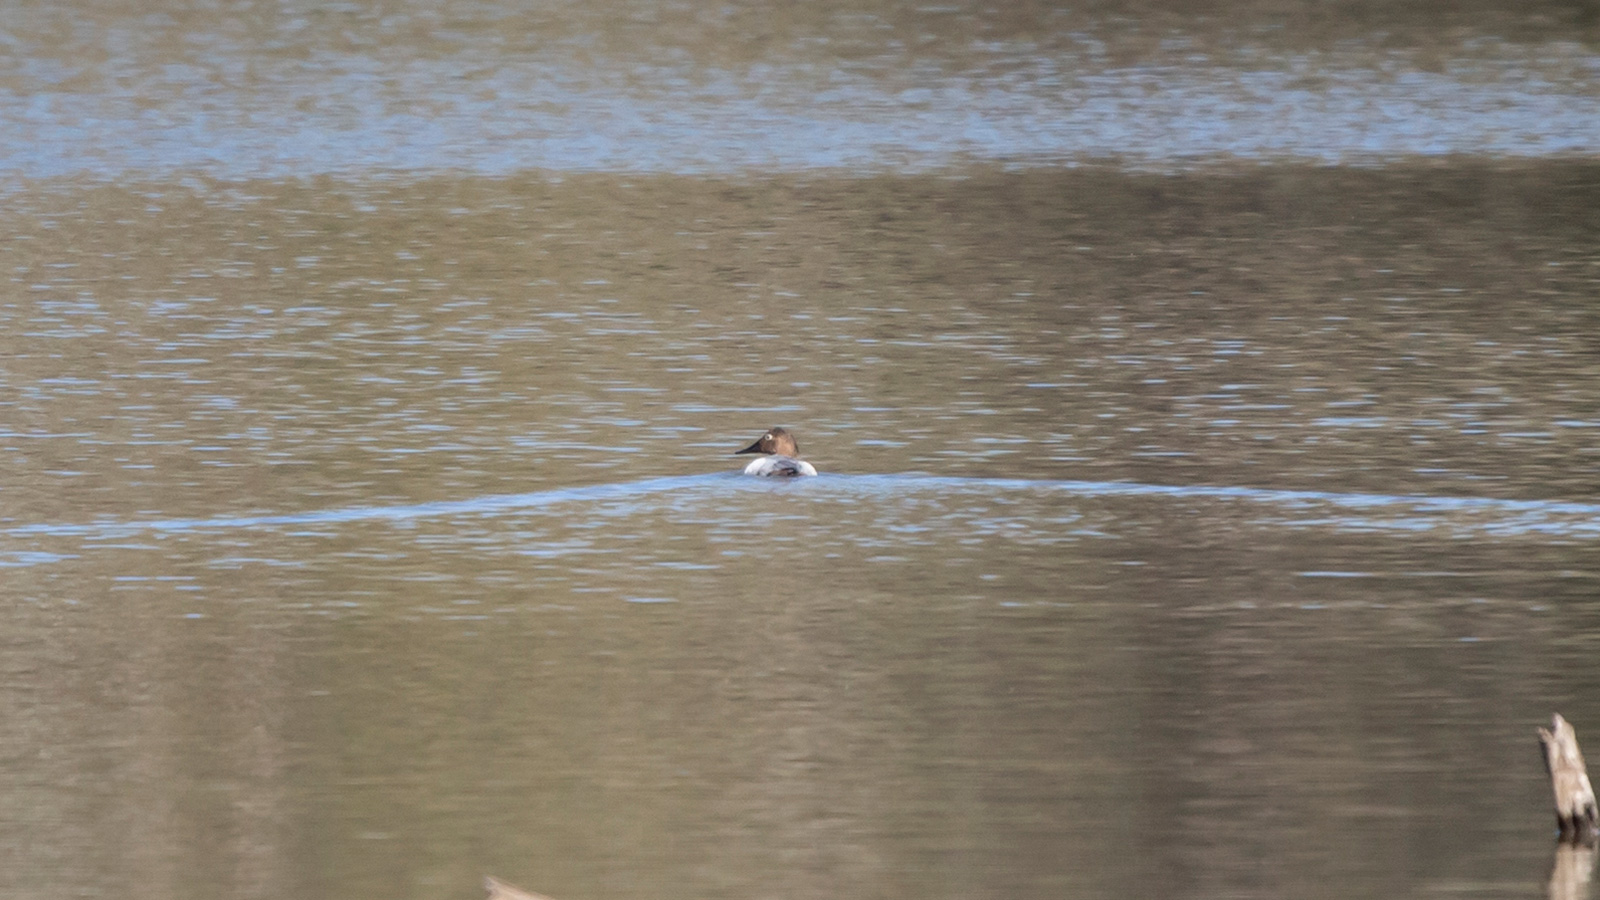 Canvasback duck swimming